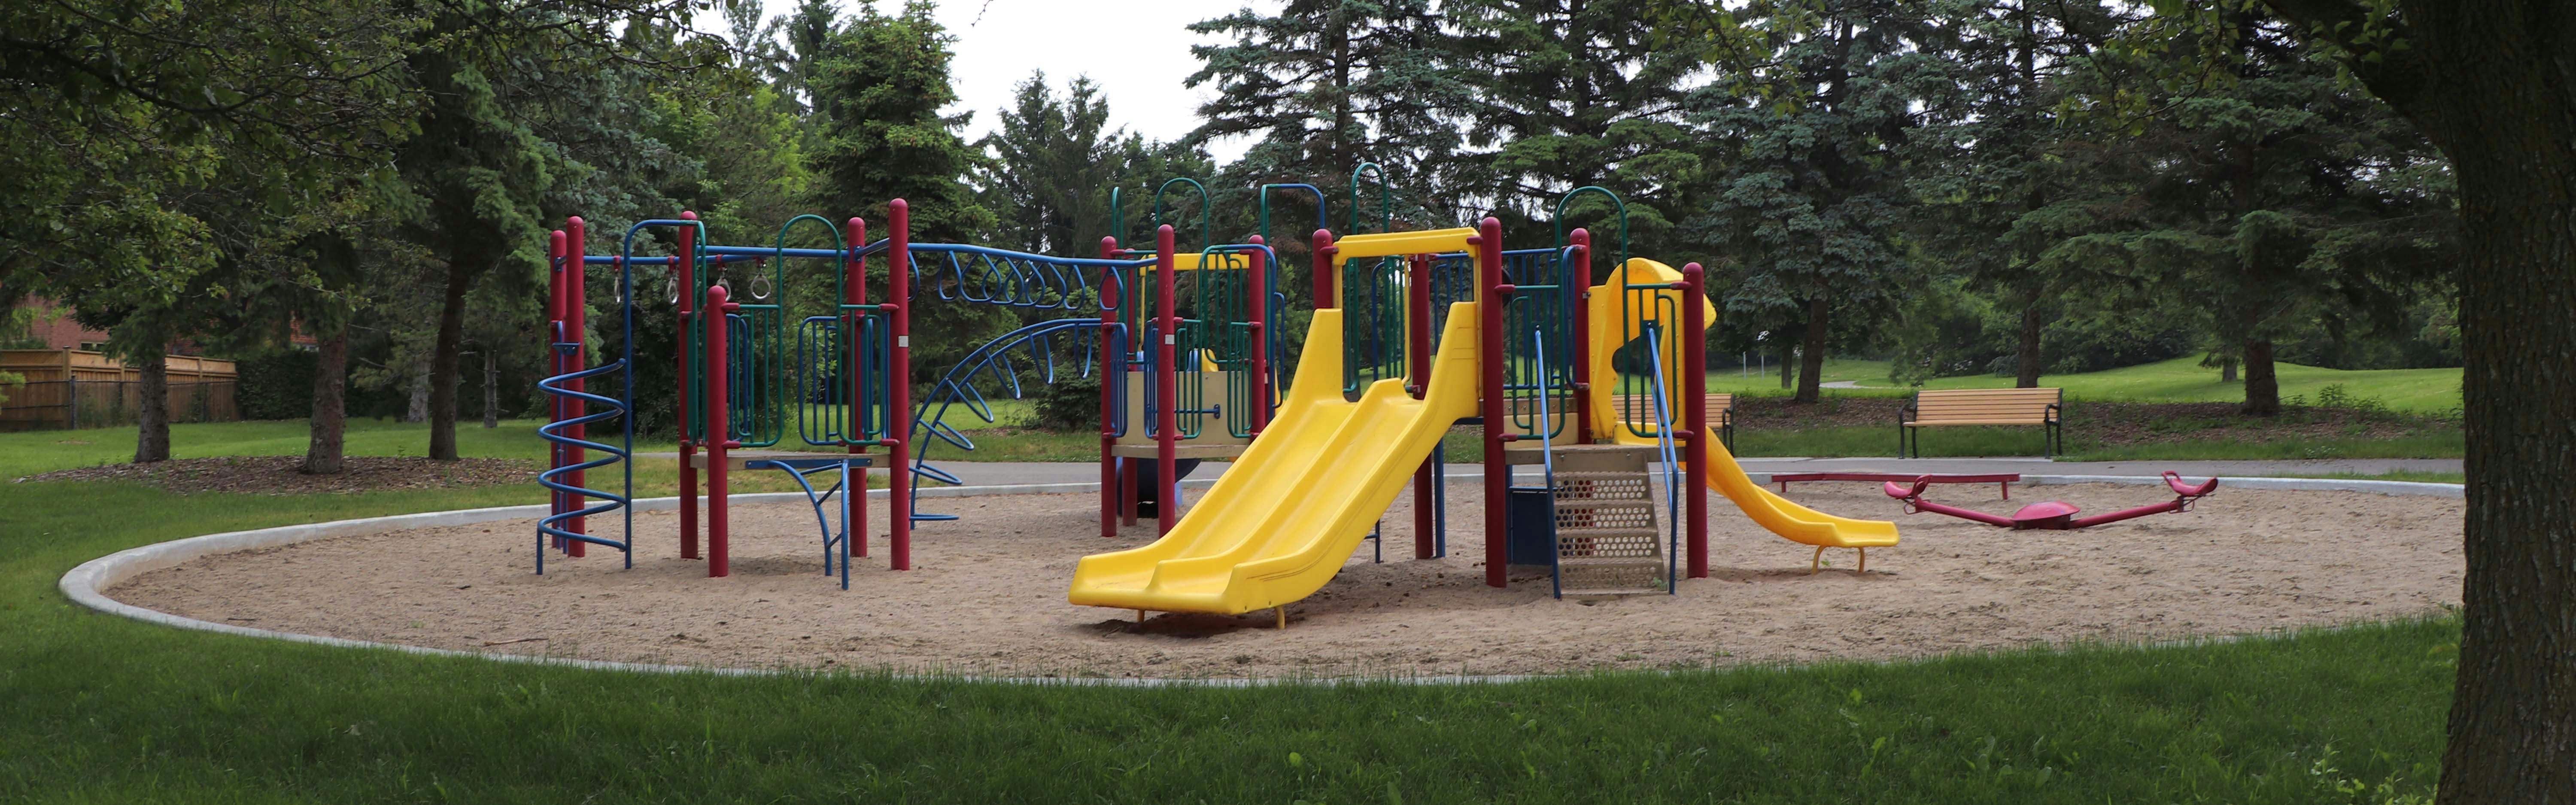 Playground structure at Glenayr Park.